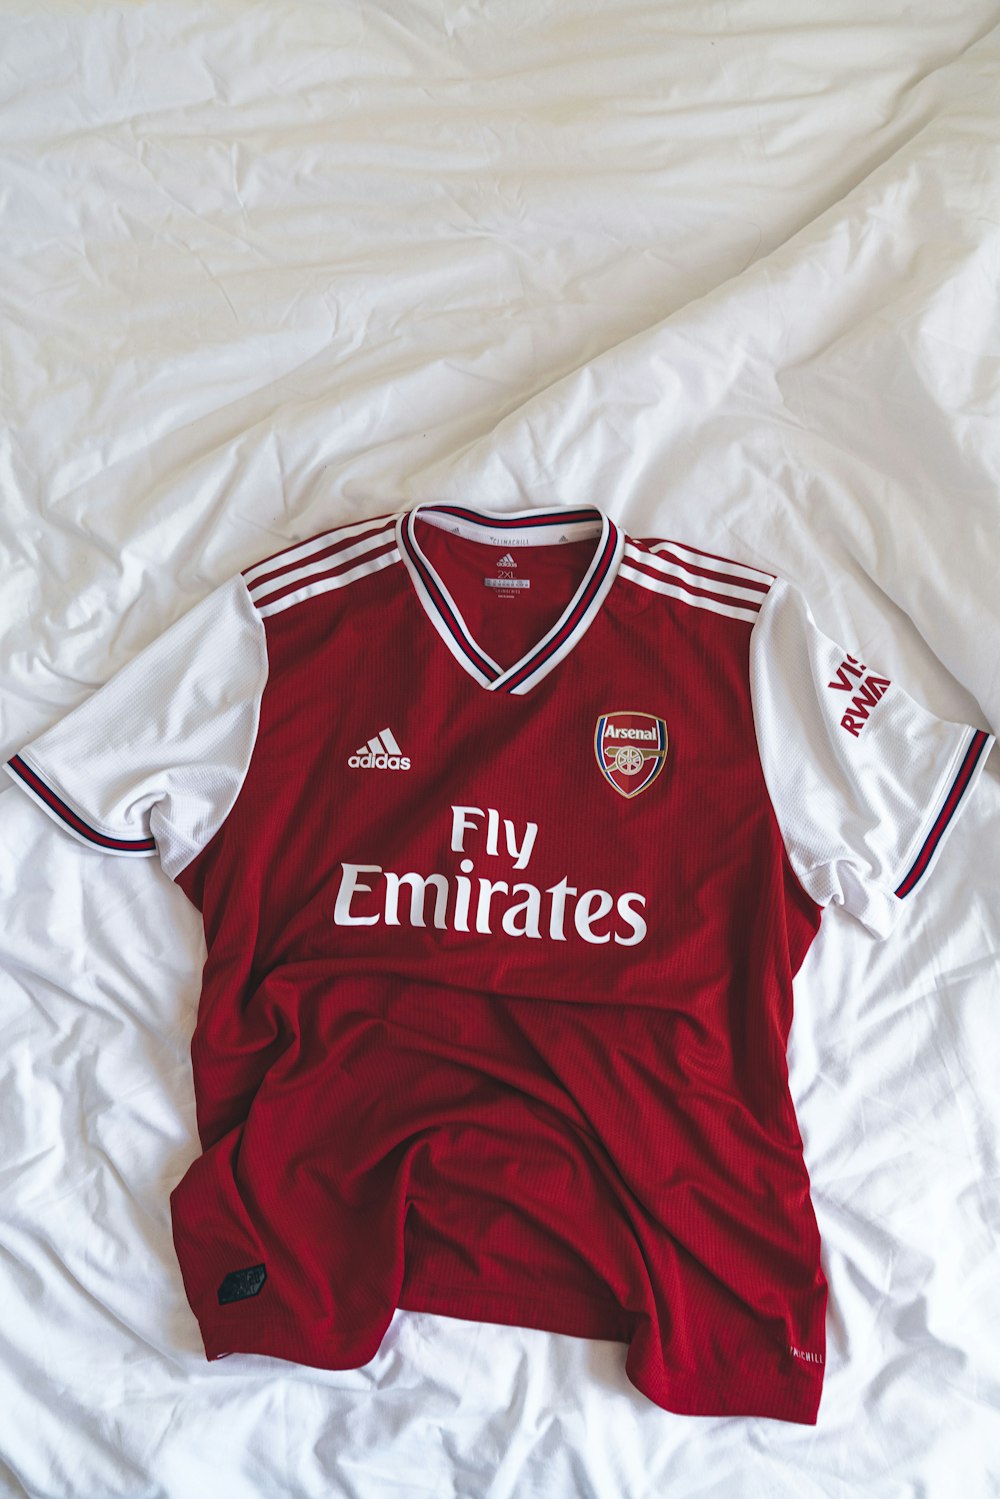 Foto camiseta roja y blanca adidas Fly Emirates – Imagen Arsenal gratis en  Unsplash